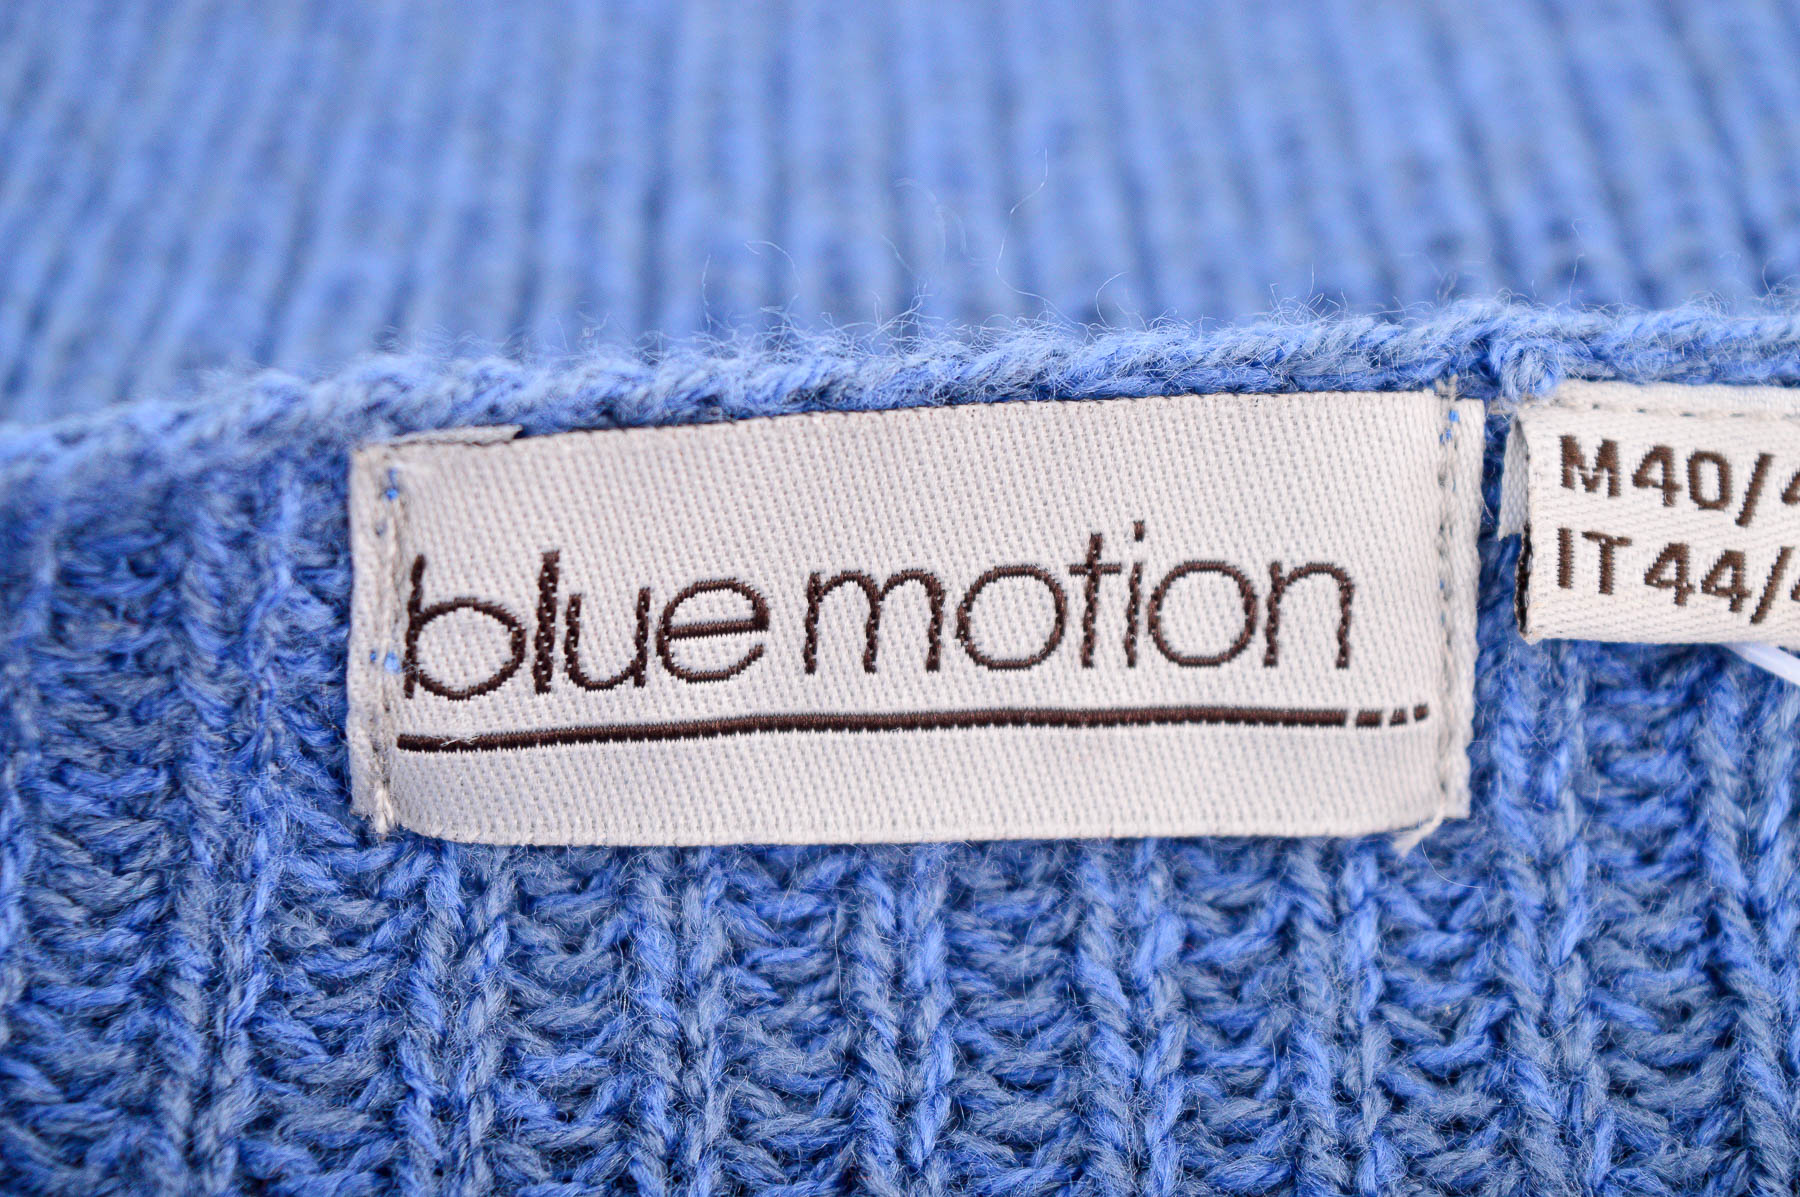 Sweter damski - Blue Motion - 2